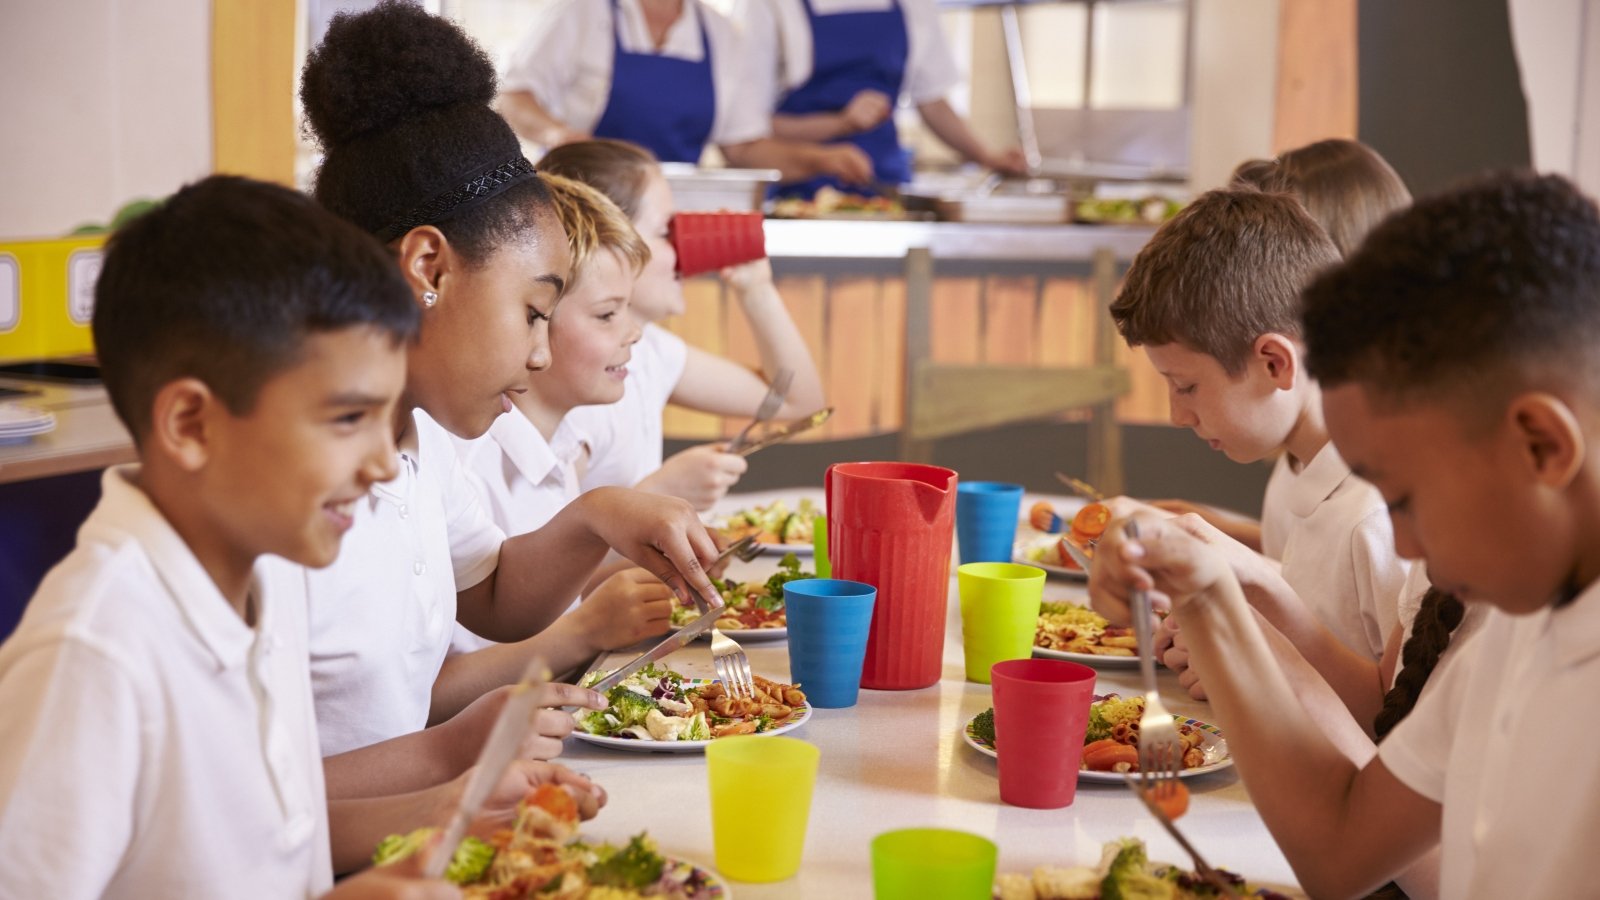 Primary school kids eating meals in school cafeteria